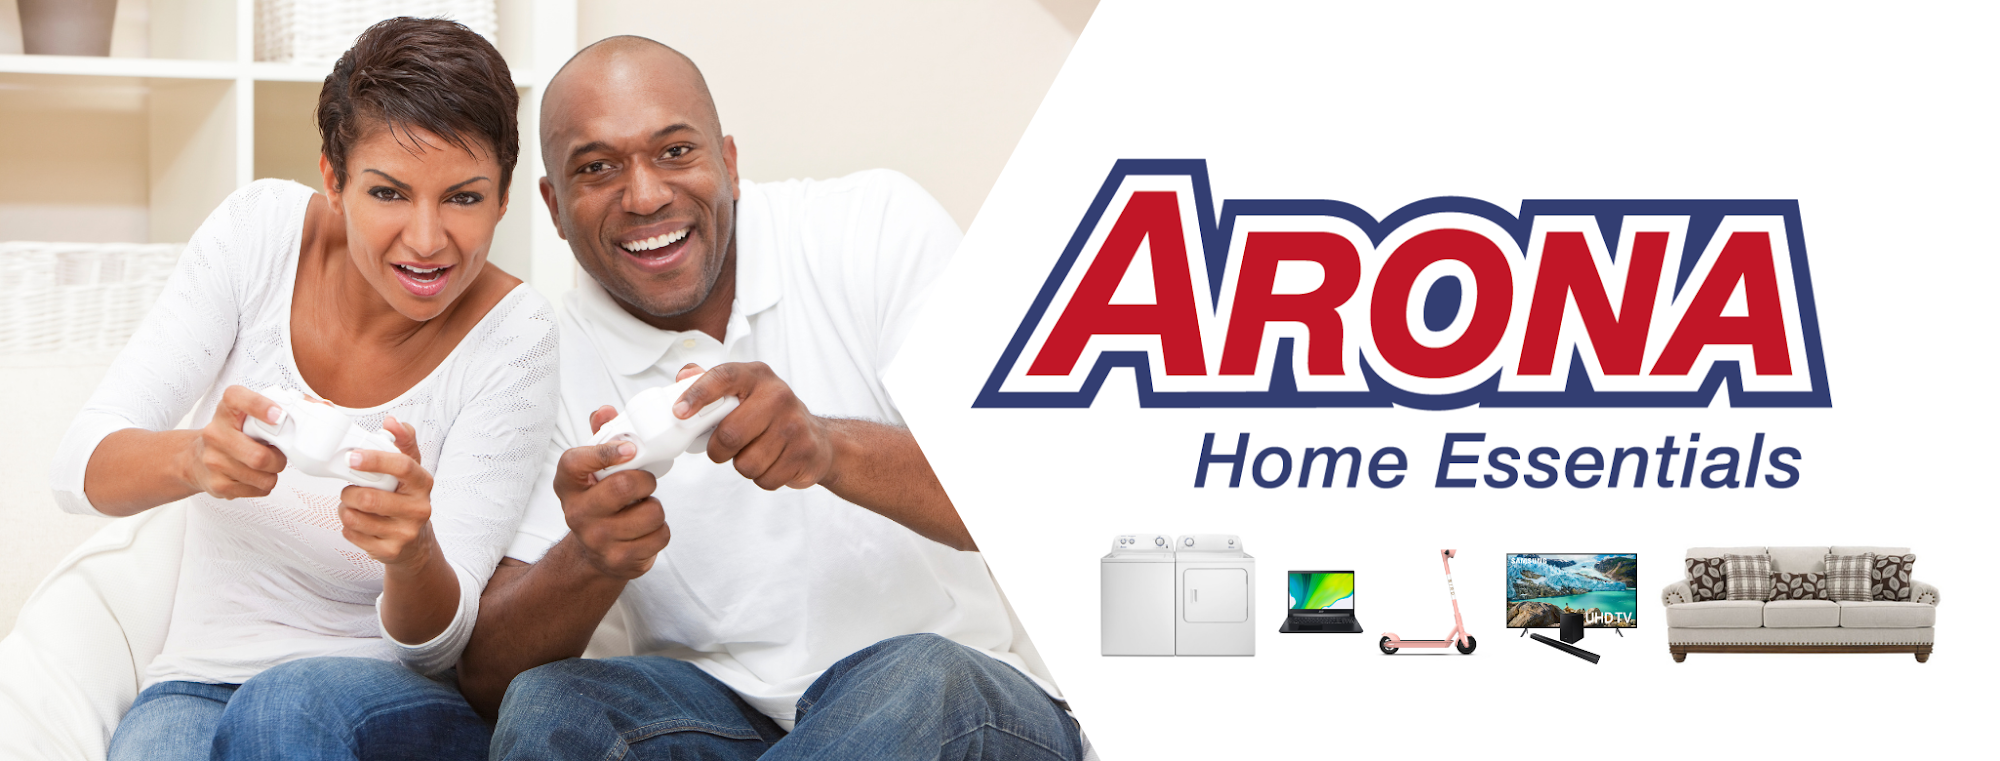 Arona Home Essentials Evansville